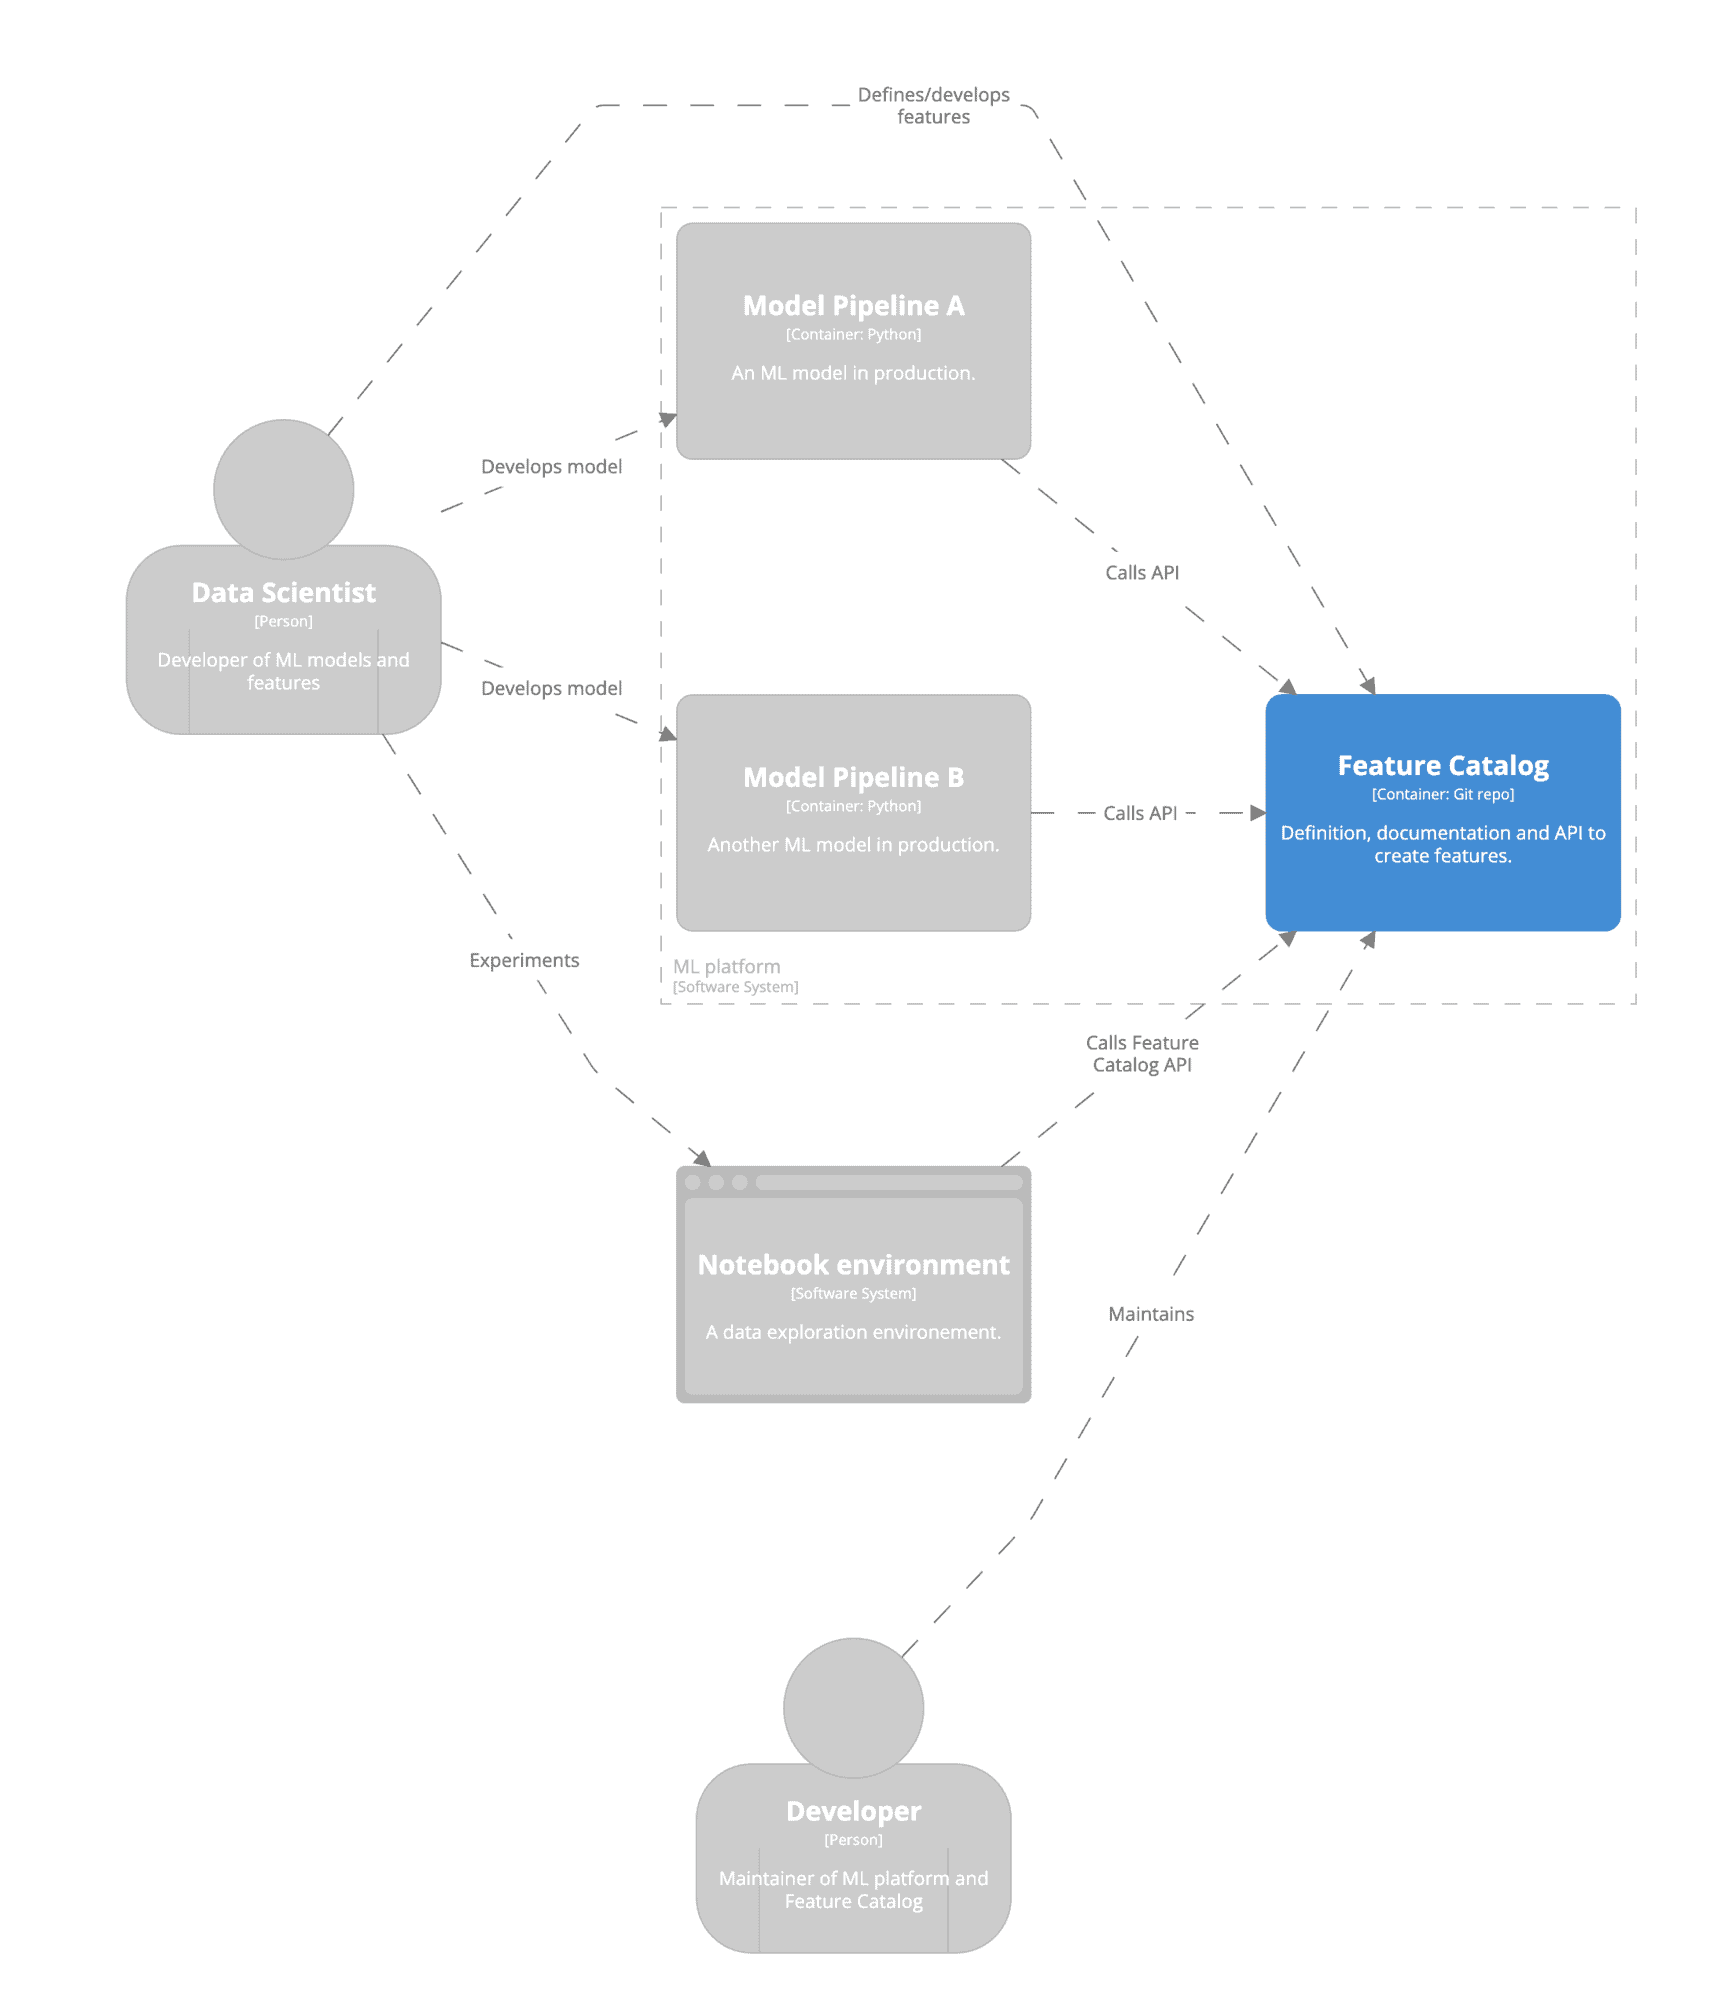 C4 model architecture of Feature Catalog